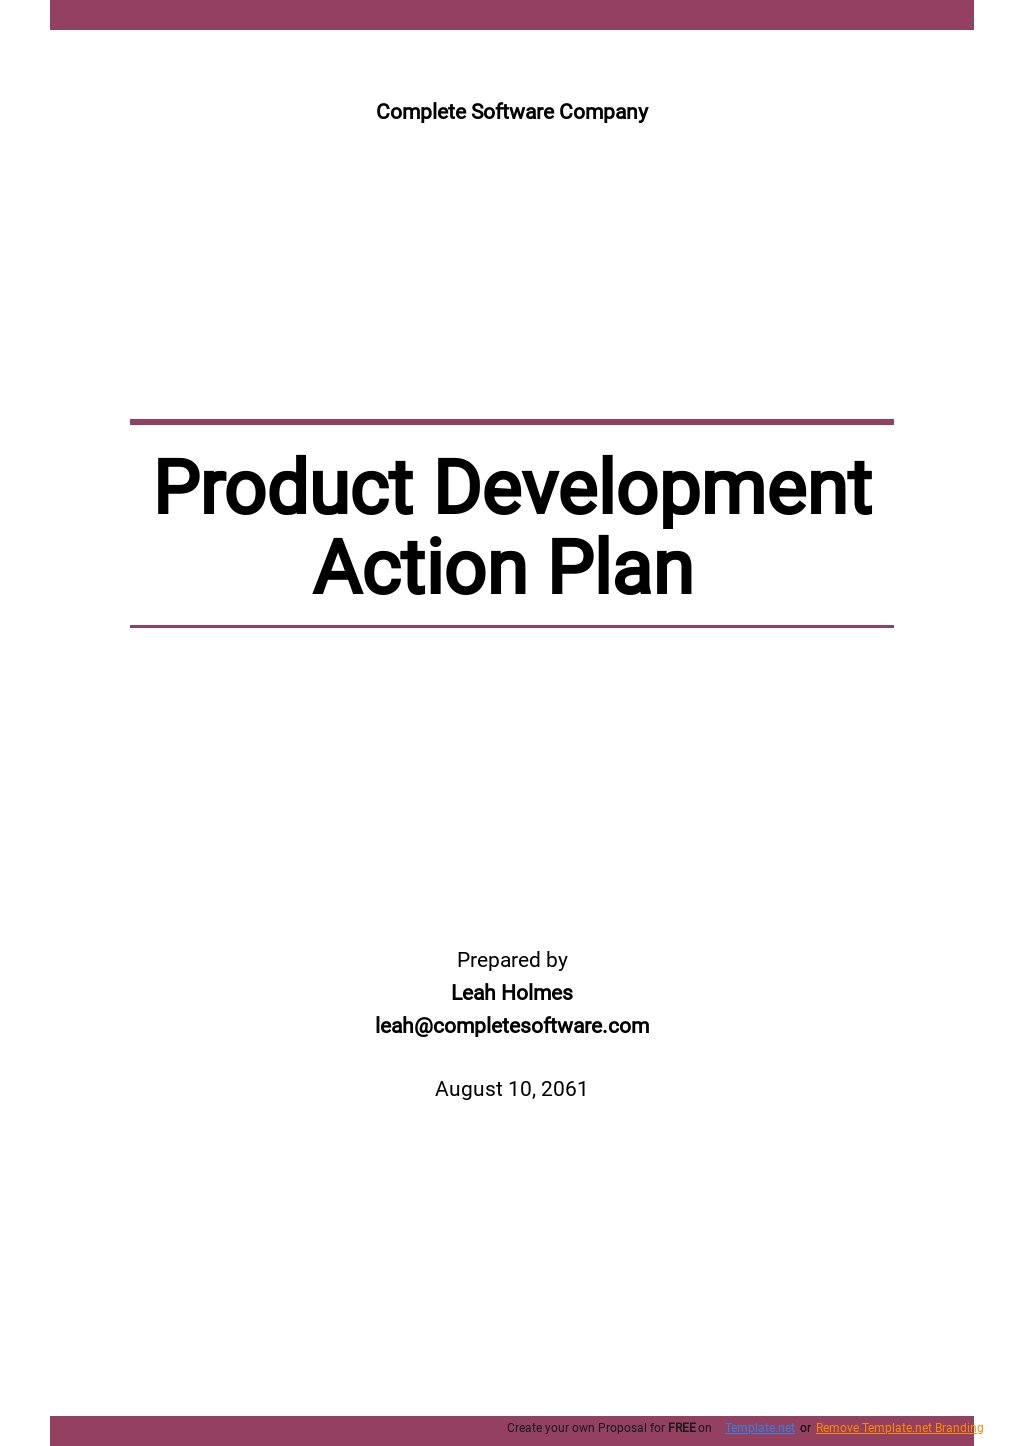 Product Development Action Plan Template Google Docs Word Apple